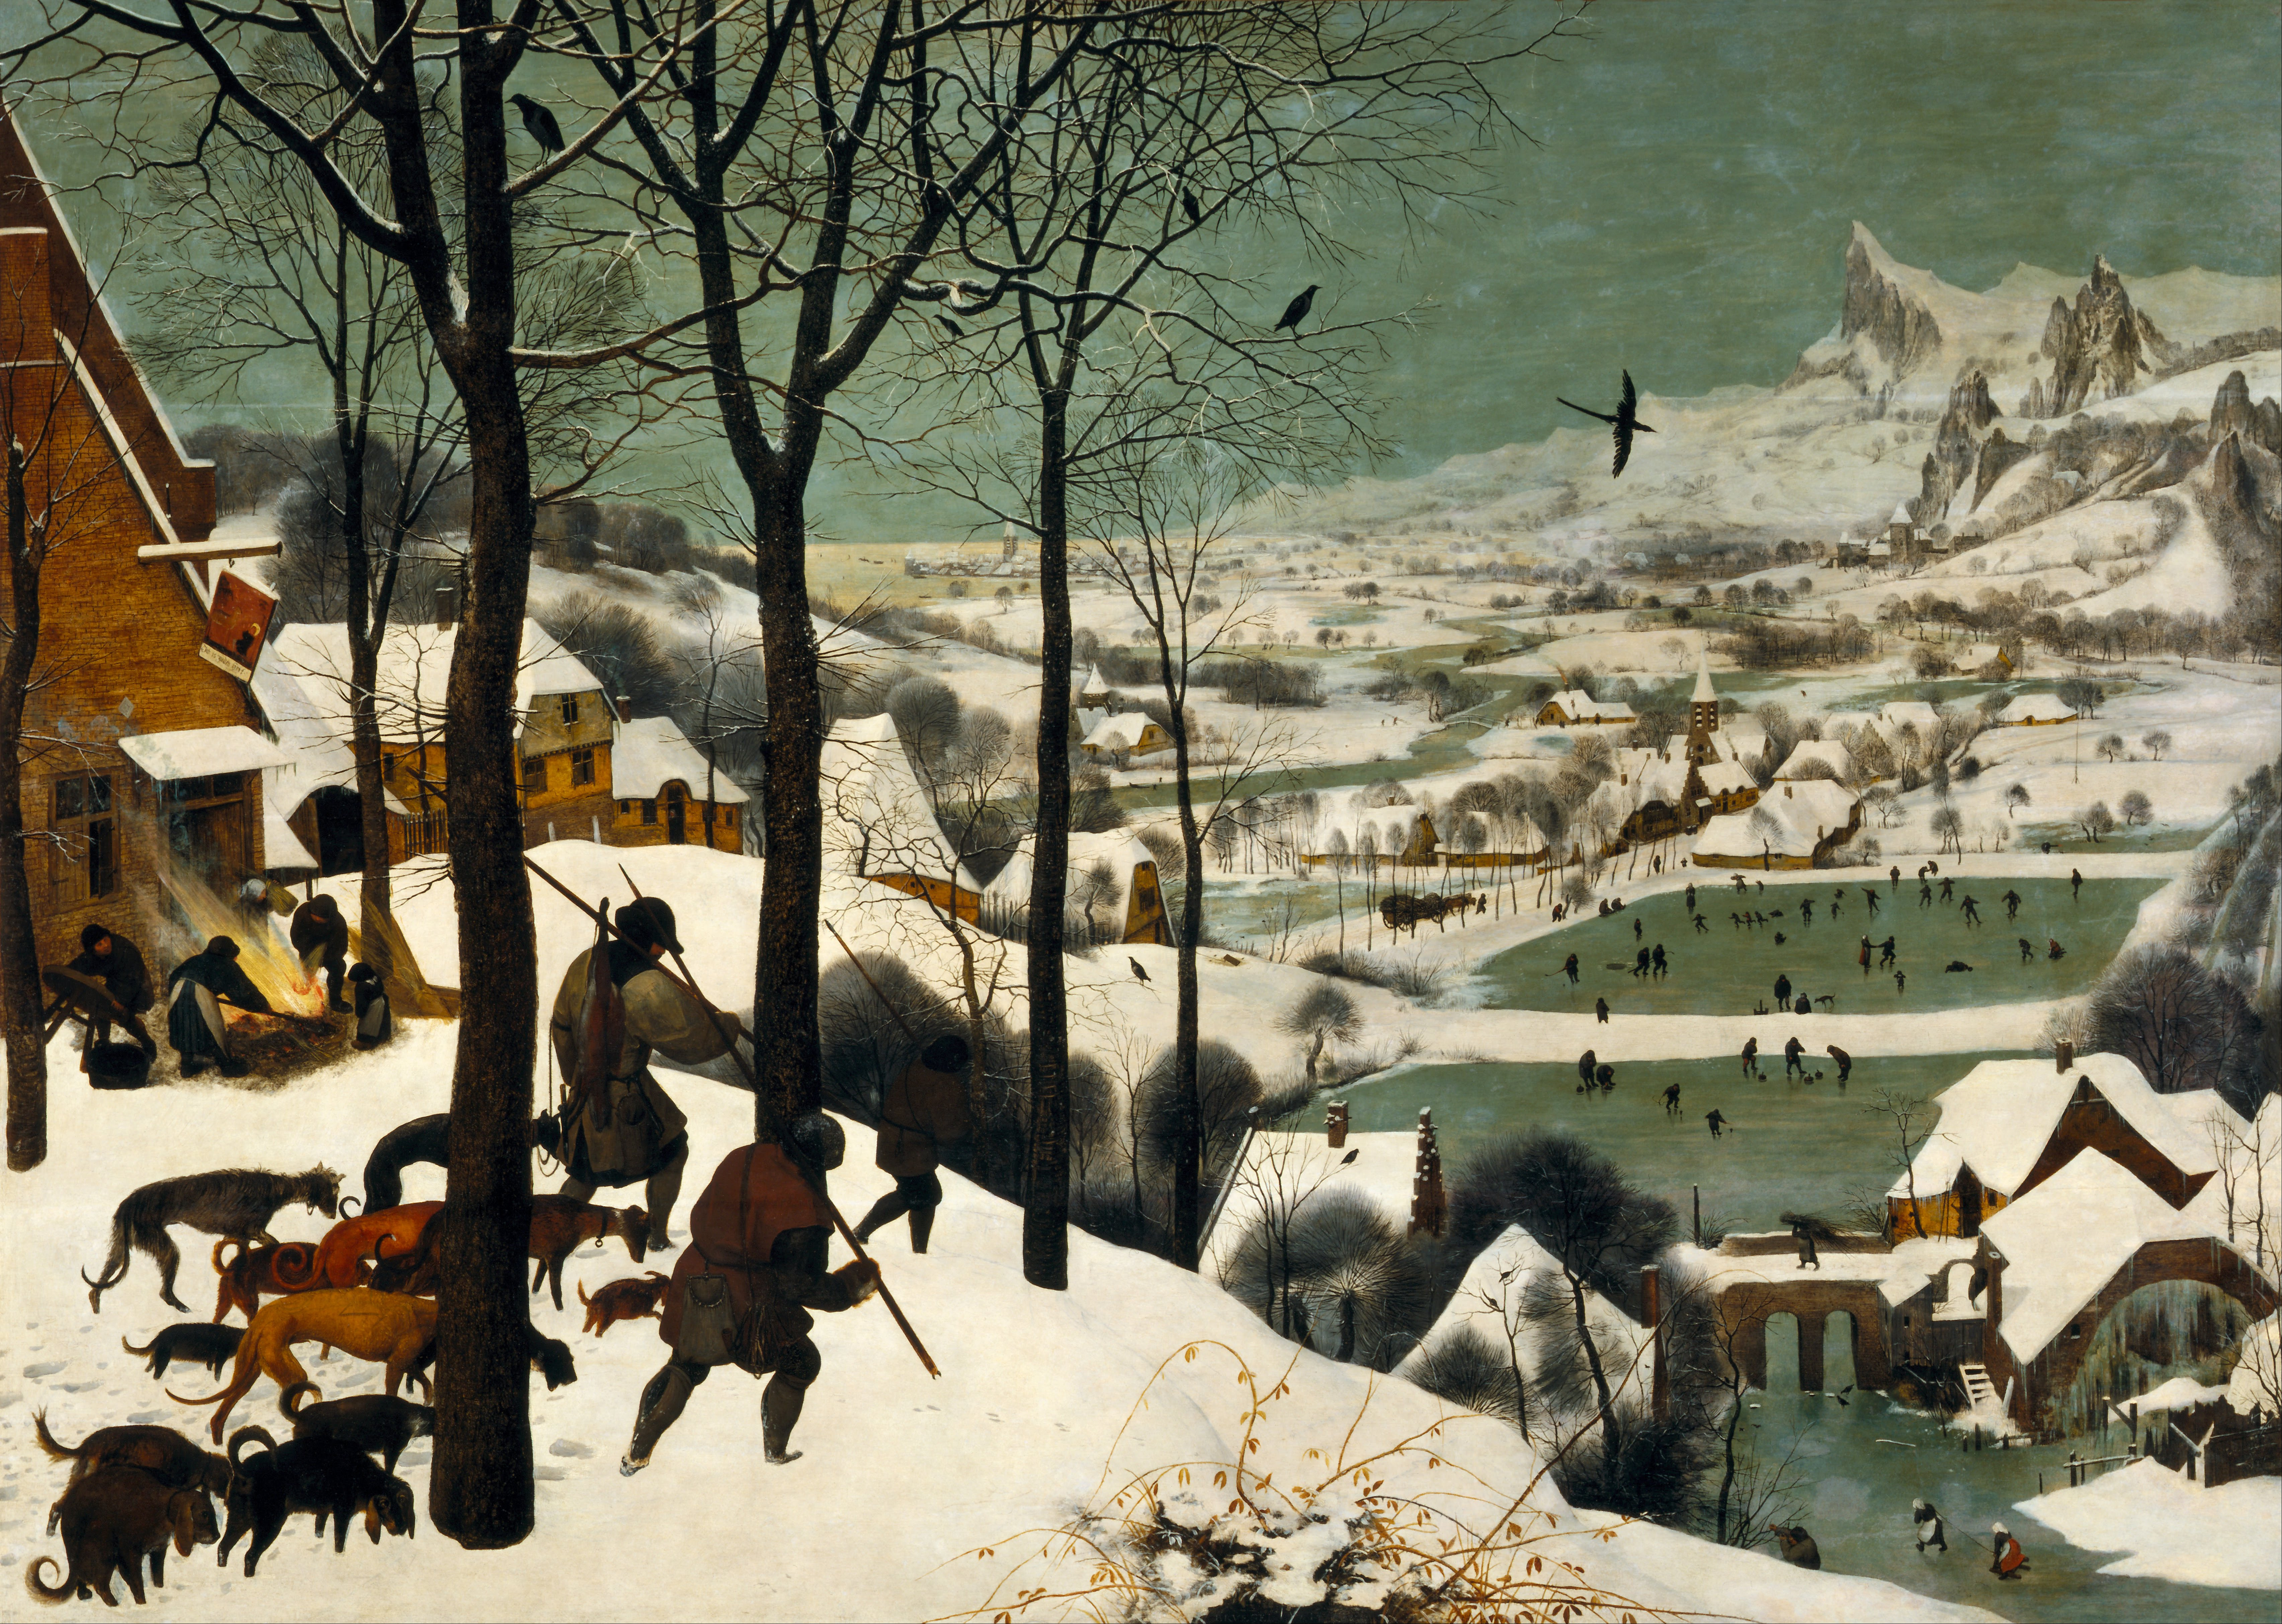 Pieter Bruegel Oil Painting Painting Artwork Hunter Dog Landscape Snow Trees Rabbits People Village 6819x4853